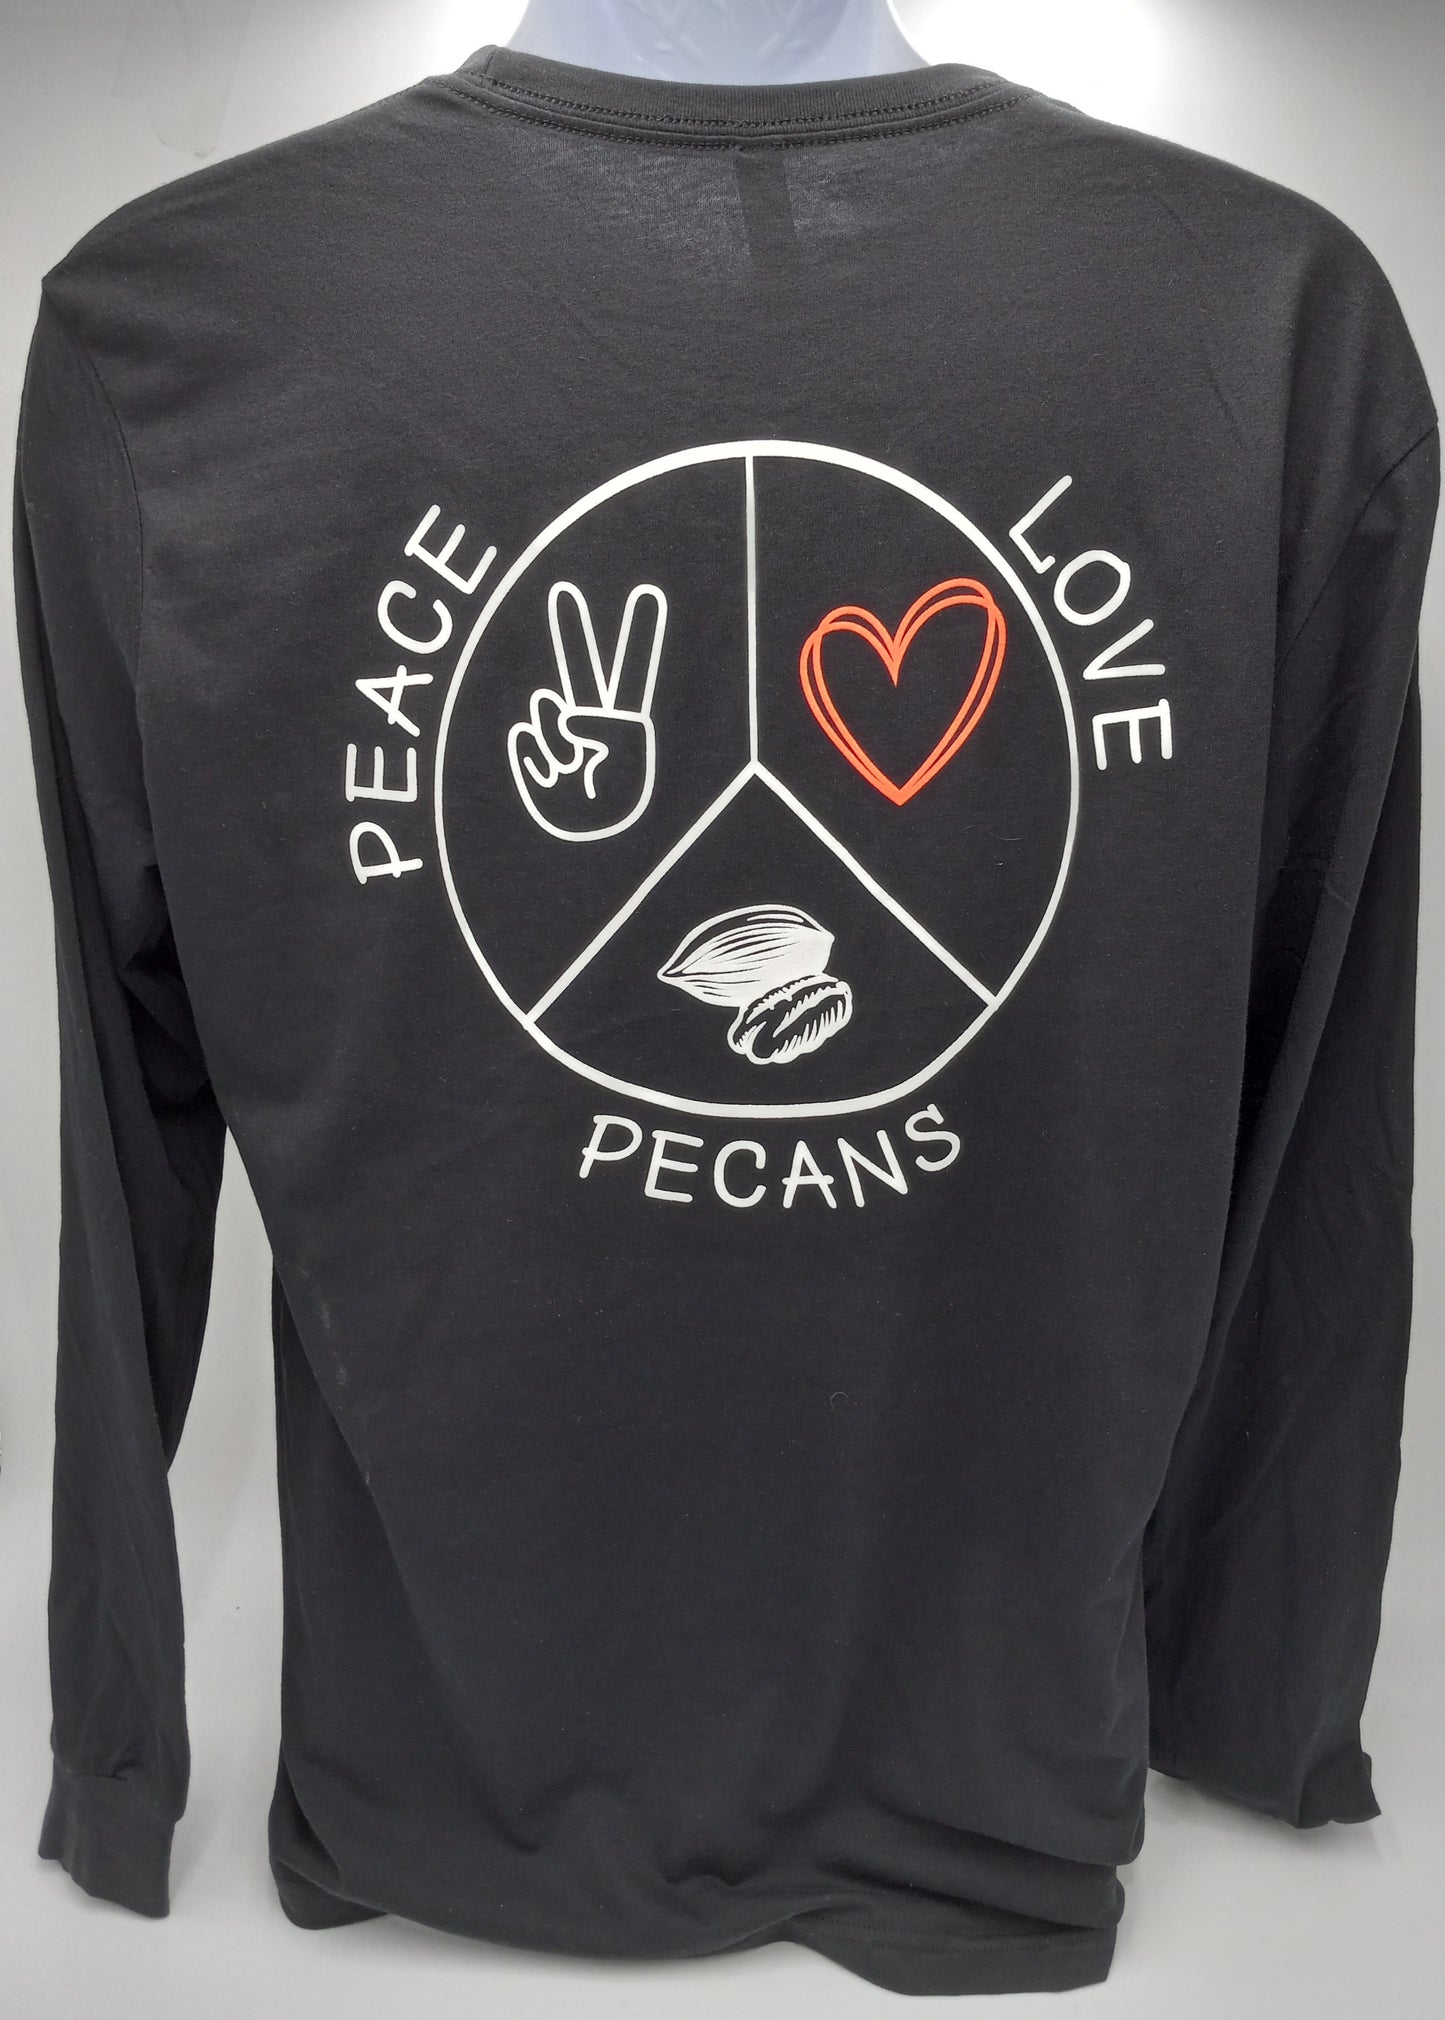 Georgia Pecan Co. Peace Love & Pecans Long Sleeve Shirt (Black)